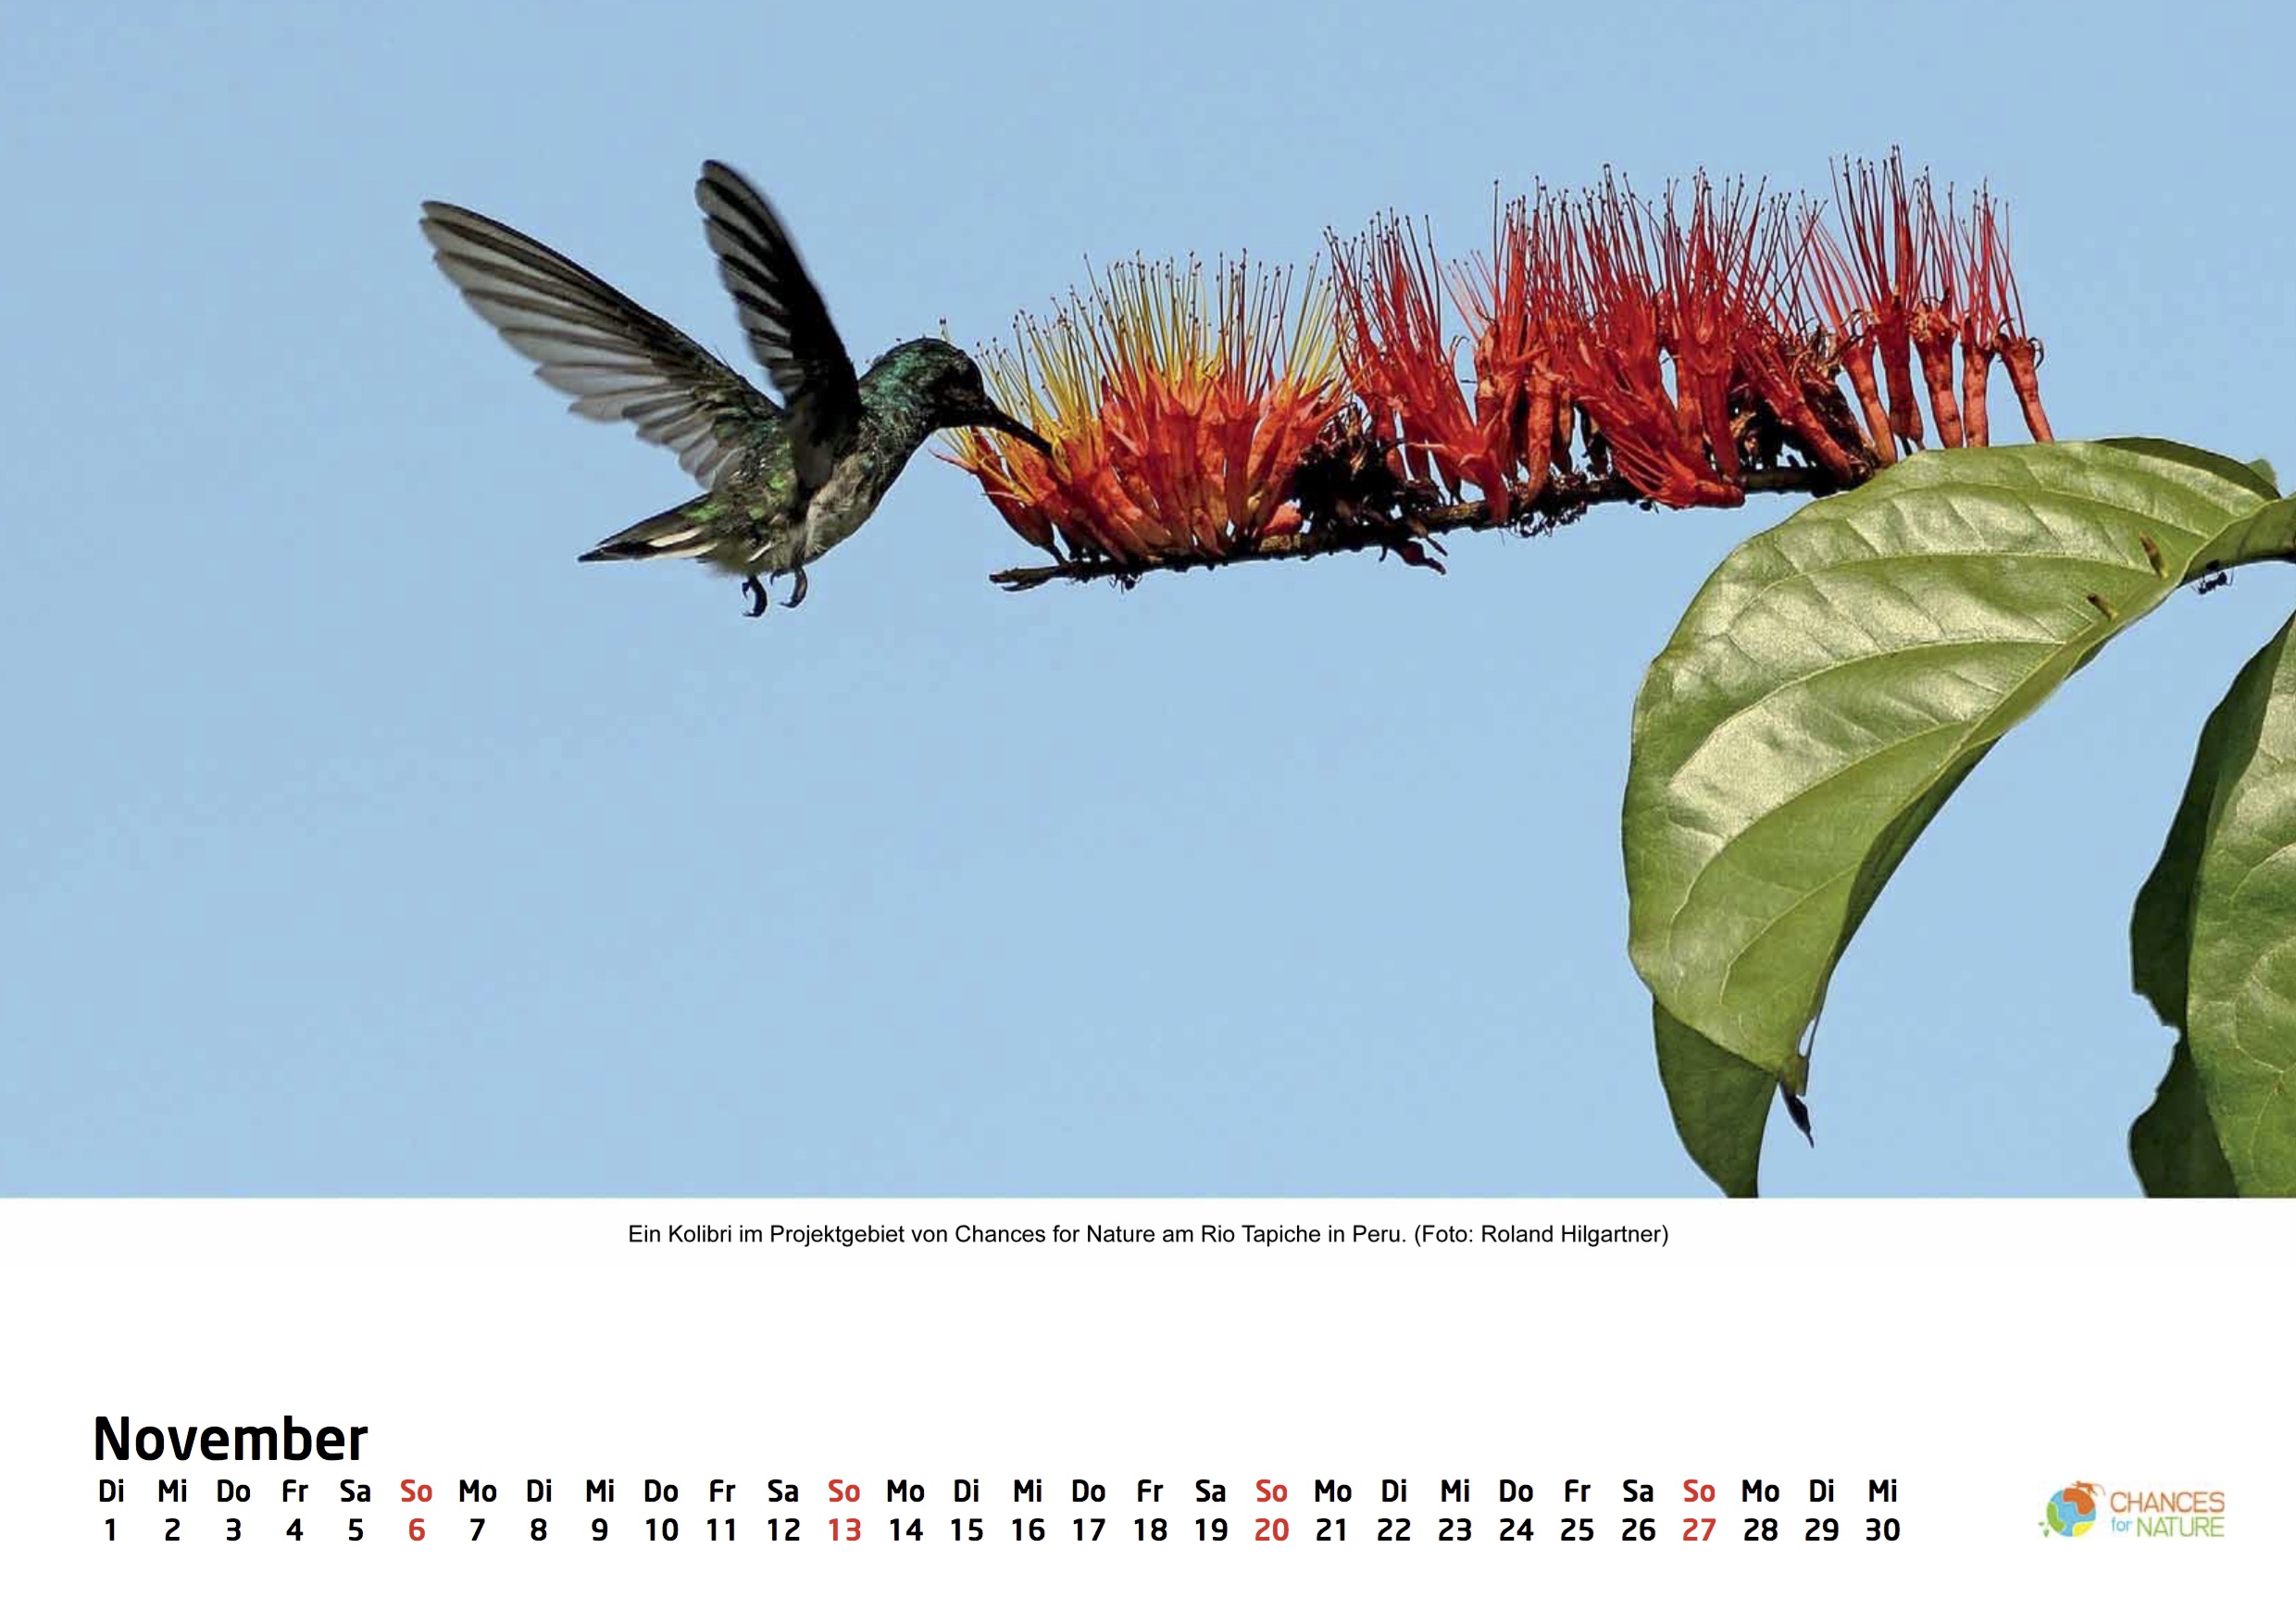 Chances for Nature Kalender 2016!!!